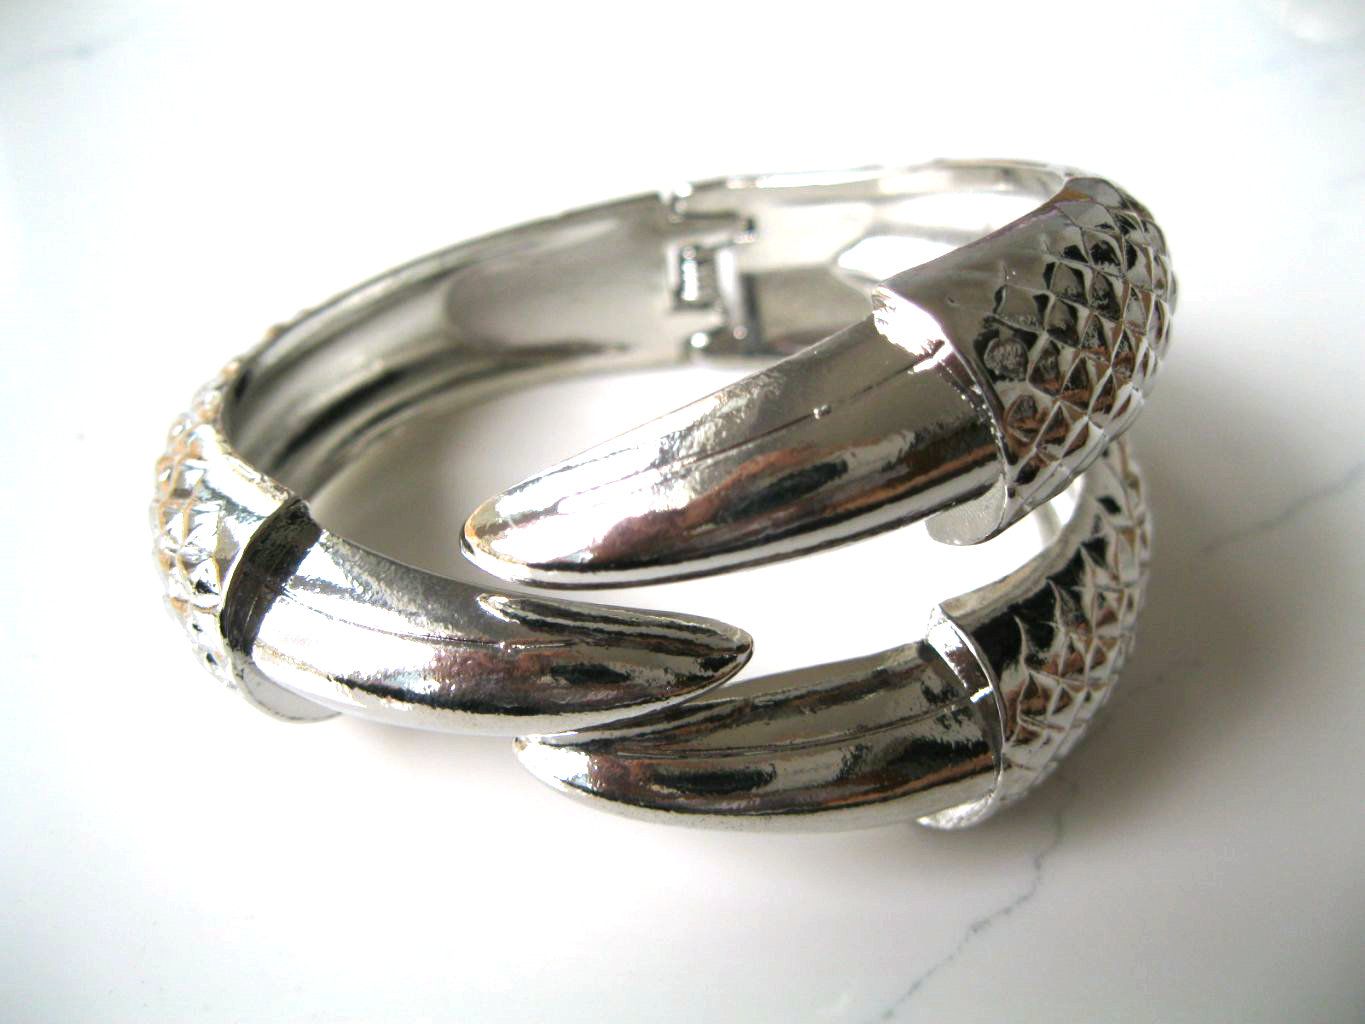 preço de fábrica!!! Pulseiras de pulseira de ouro de charme / pulseiras de prata com forma de Talon 